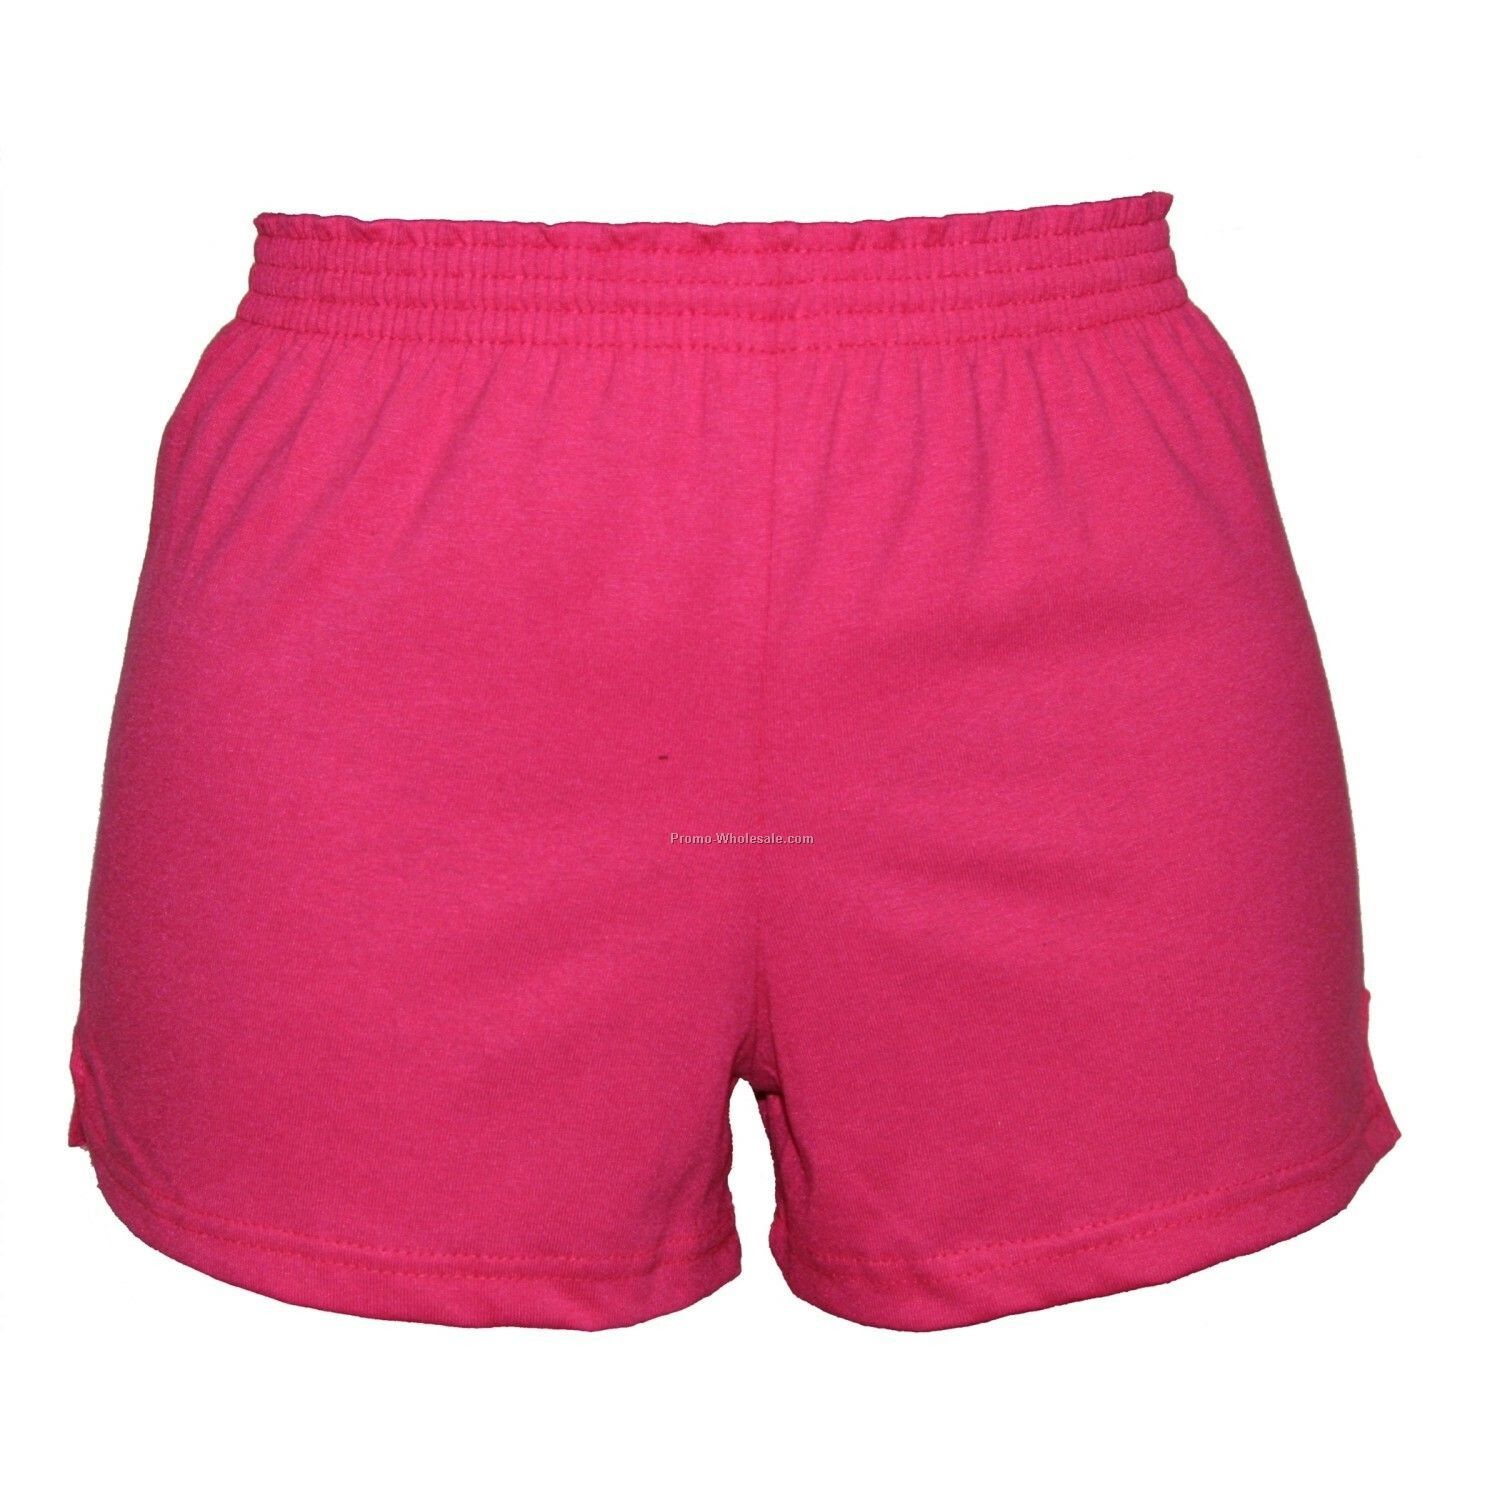 Youths' Fuchsia Pink Spirit Shorts (Ys-yl)